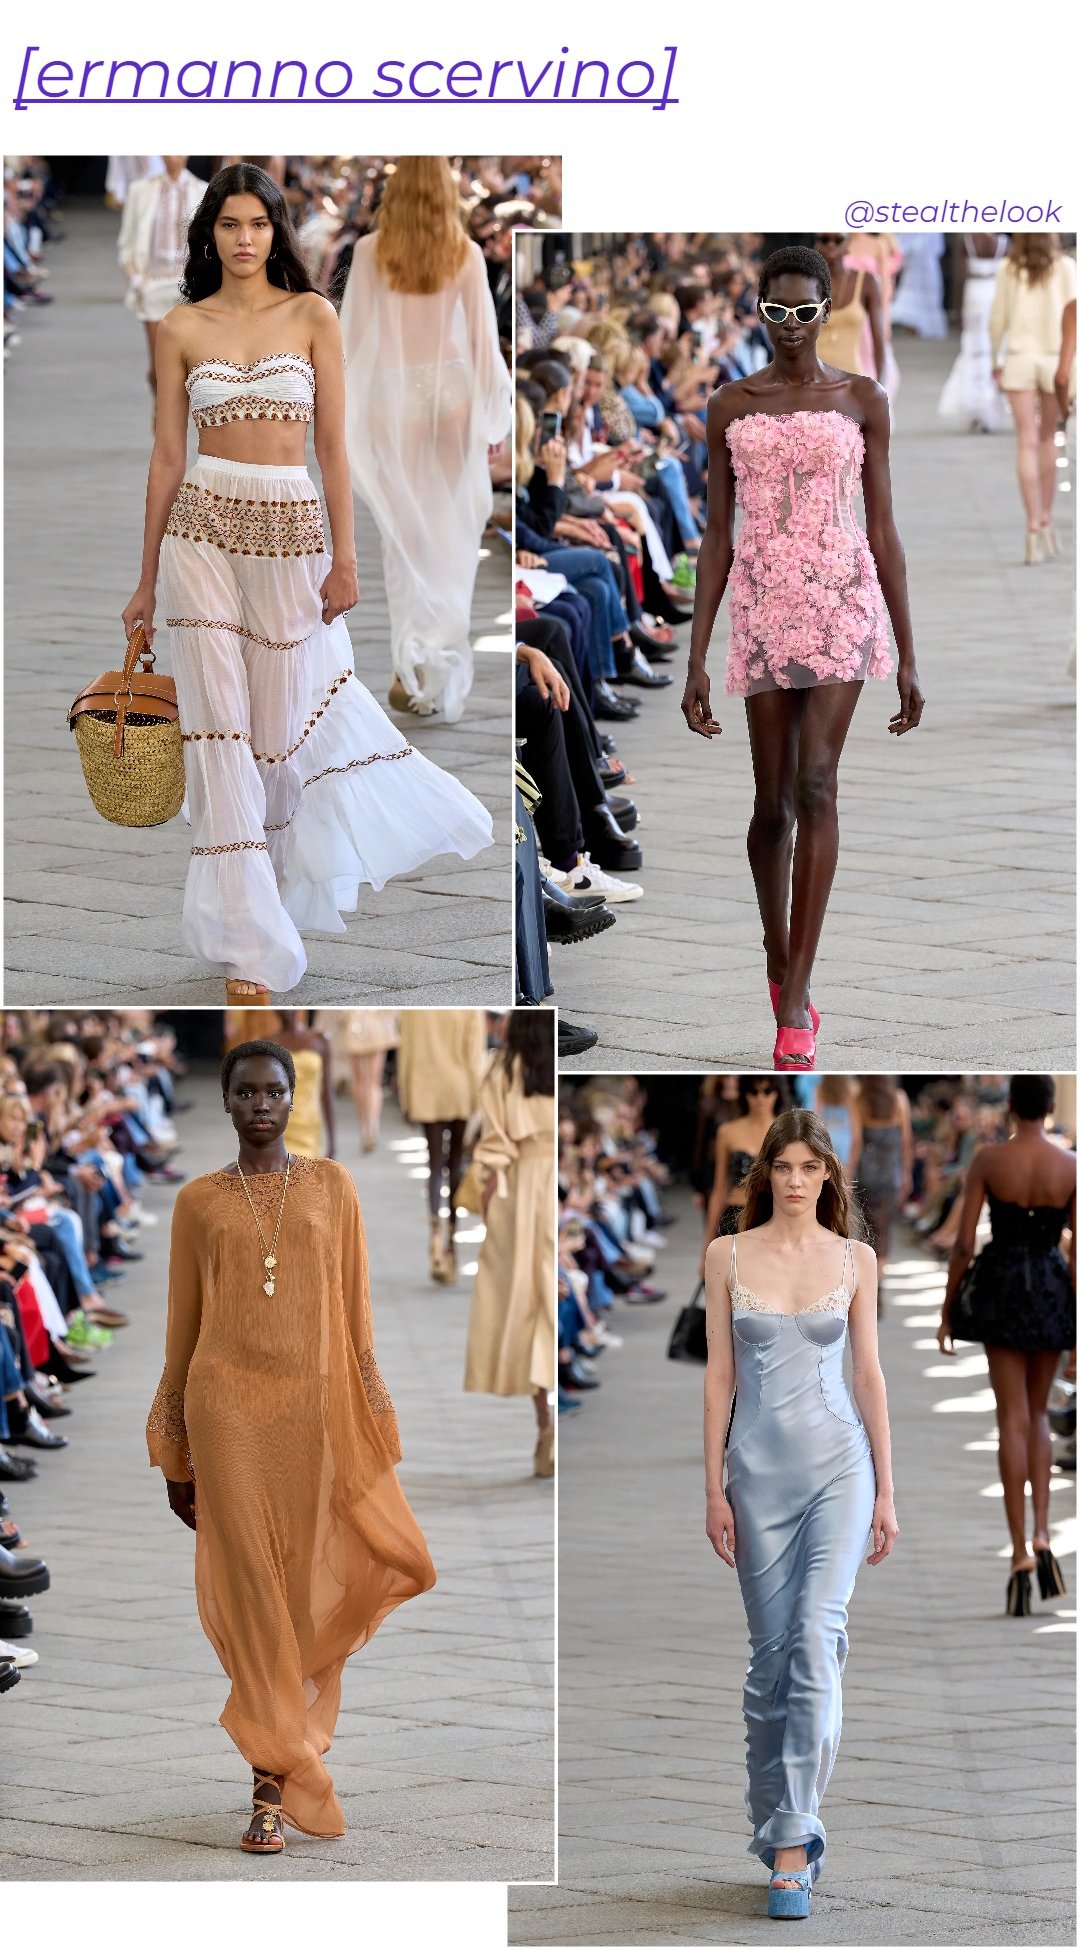 Ermanno Scervino - roupas diversas - Milano Fashion Week - primavera - colagem de imagens - https://stealthelook.com.br